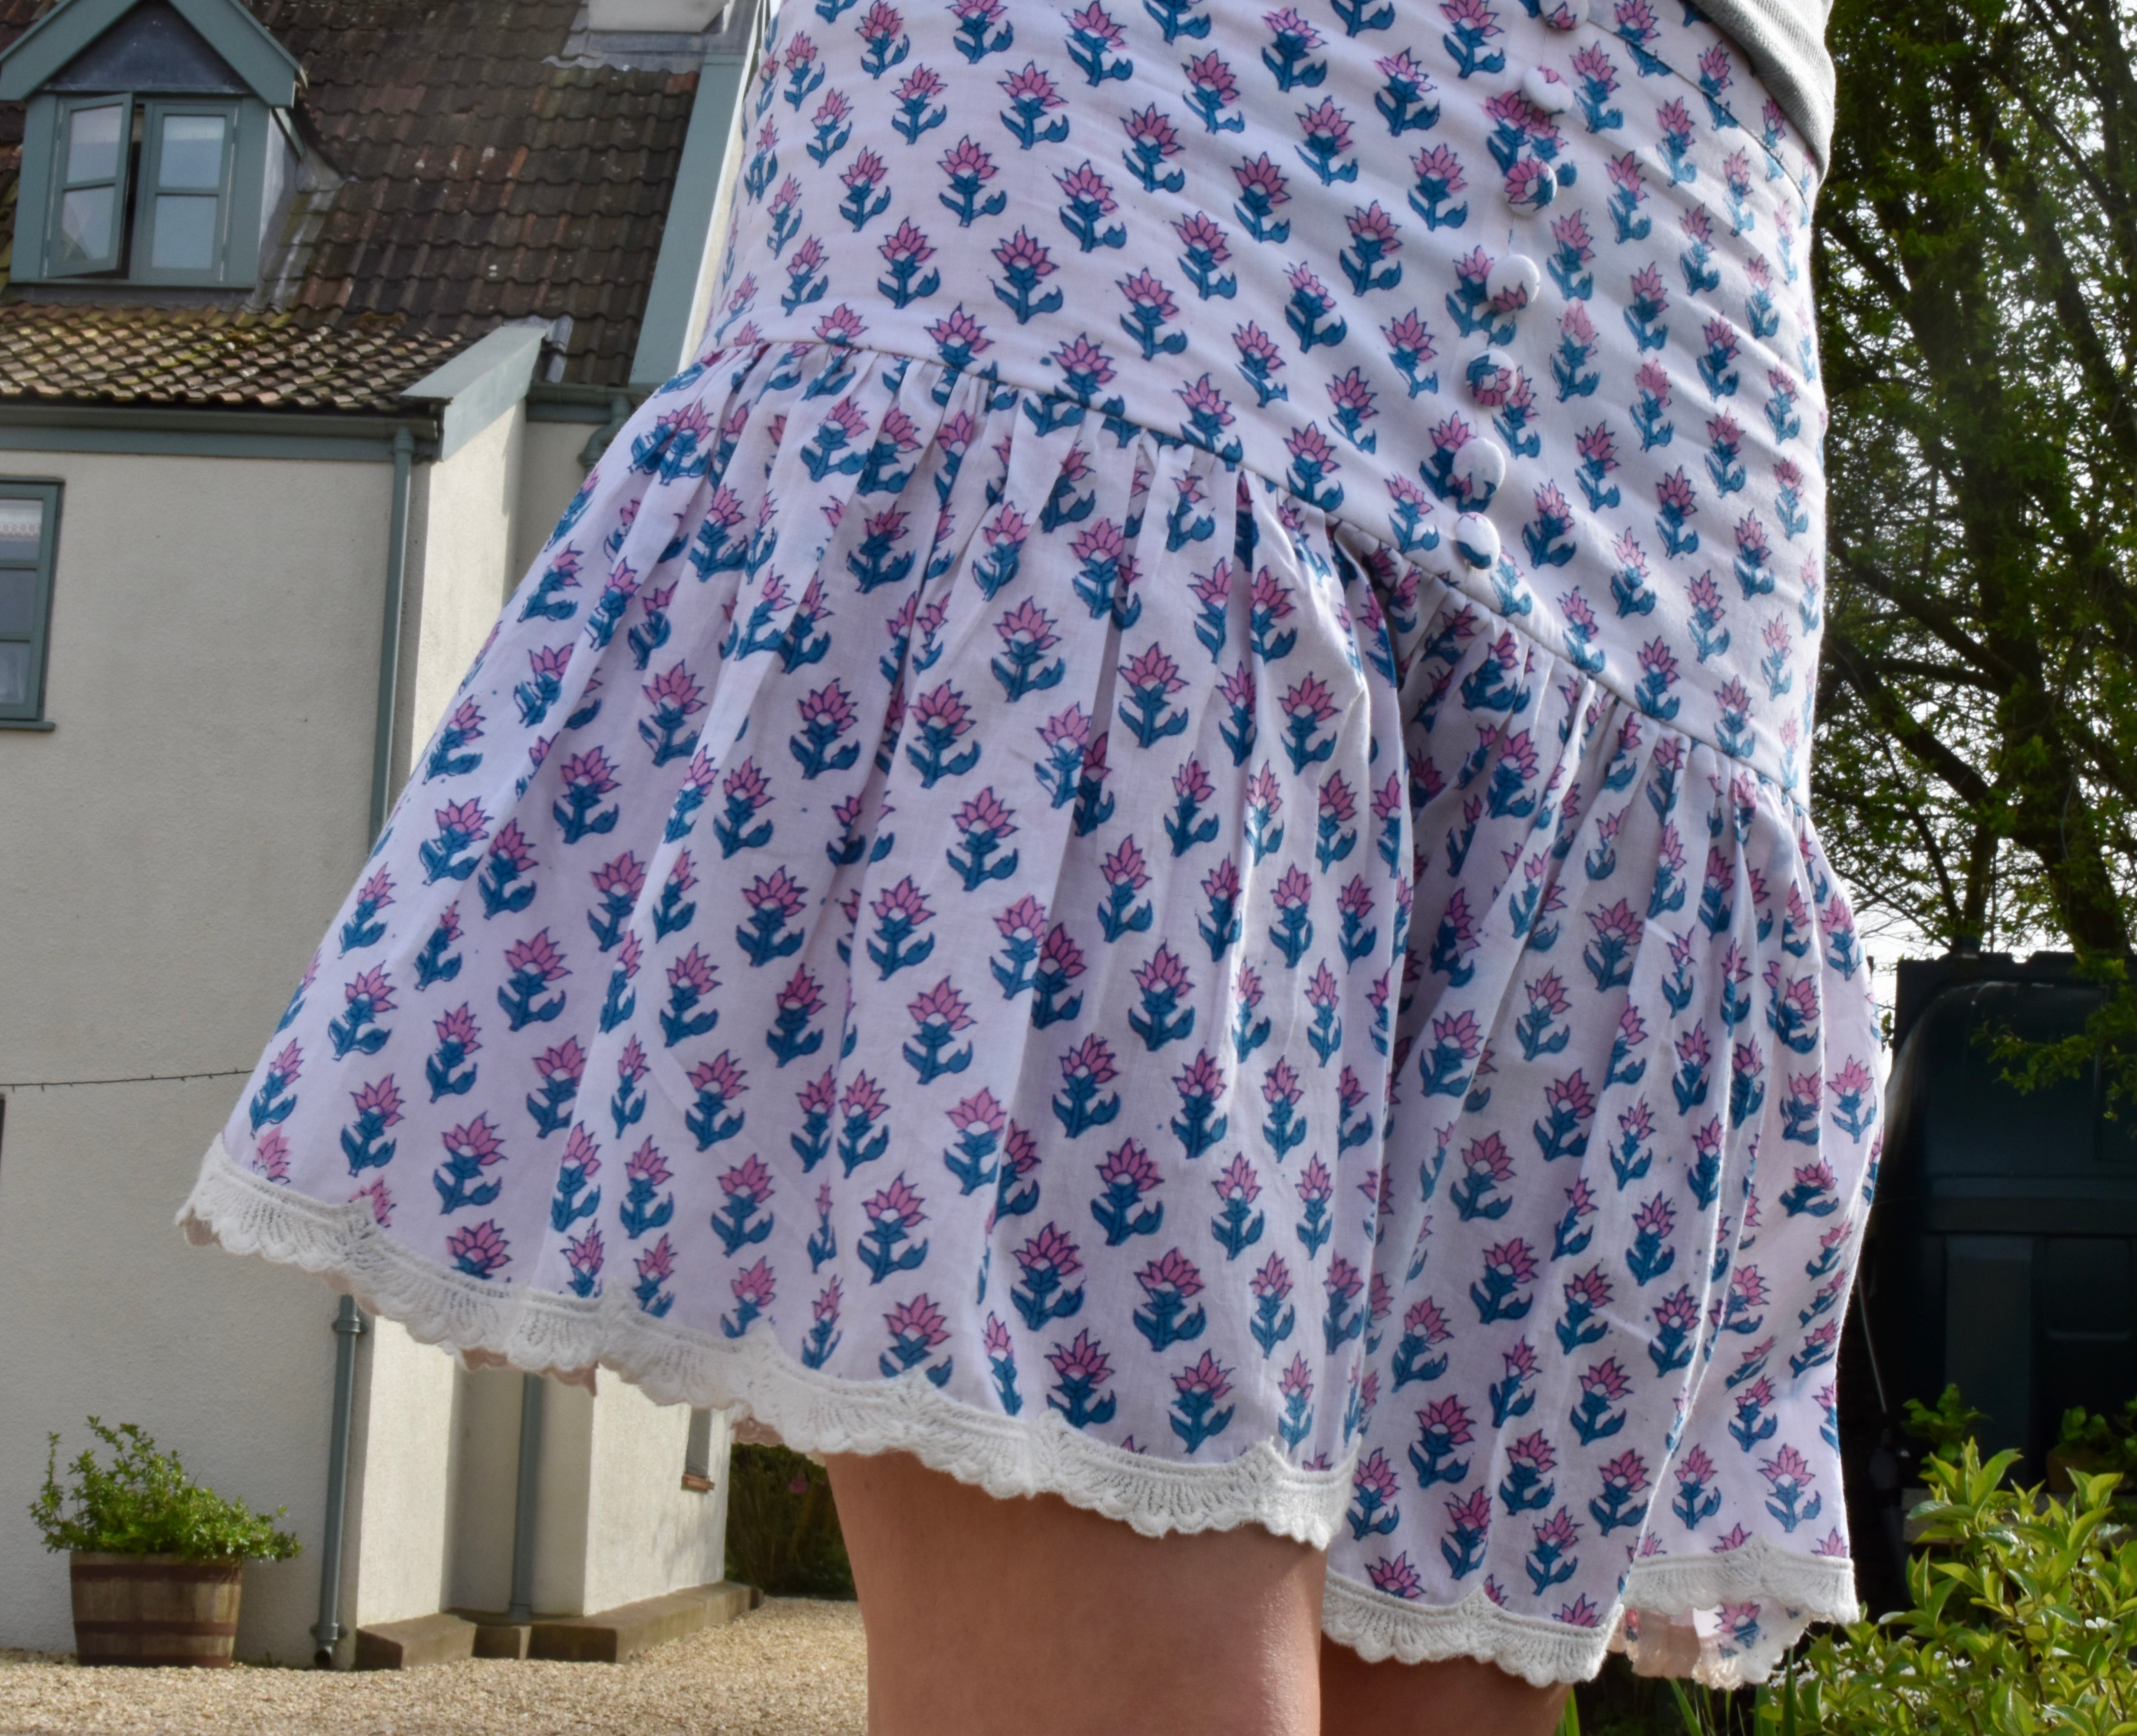 Button Mini Skirt